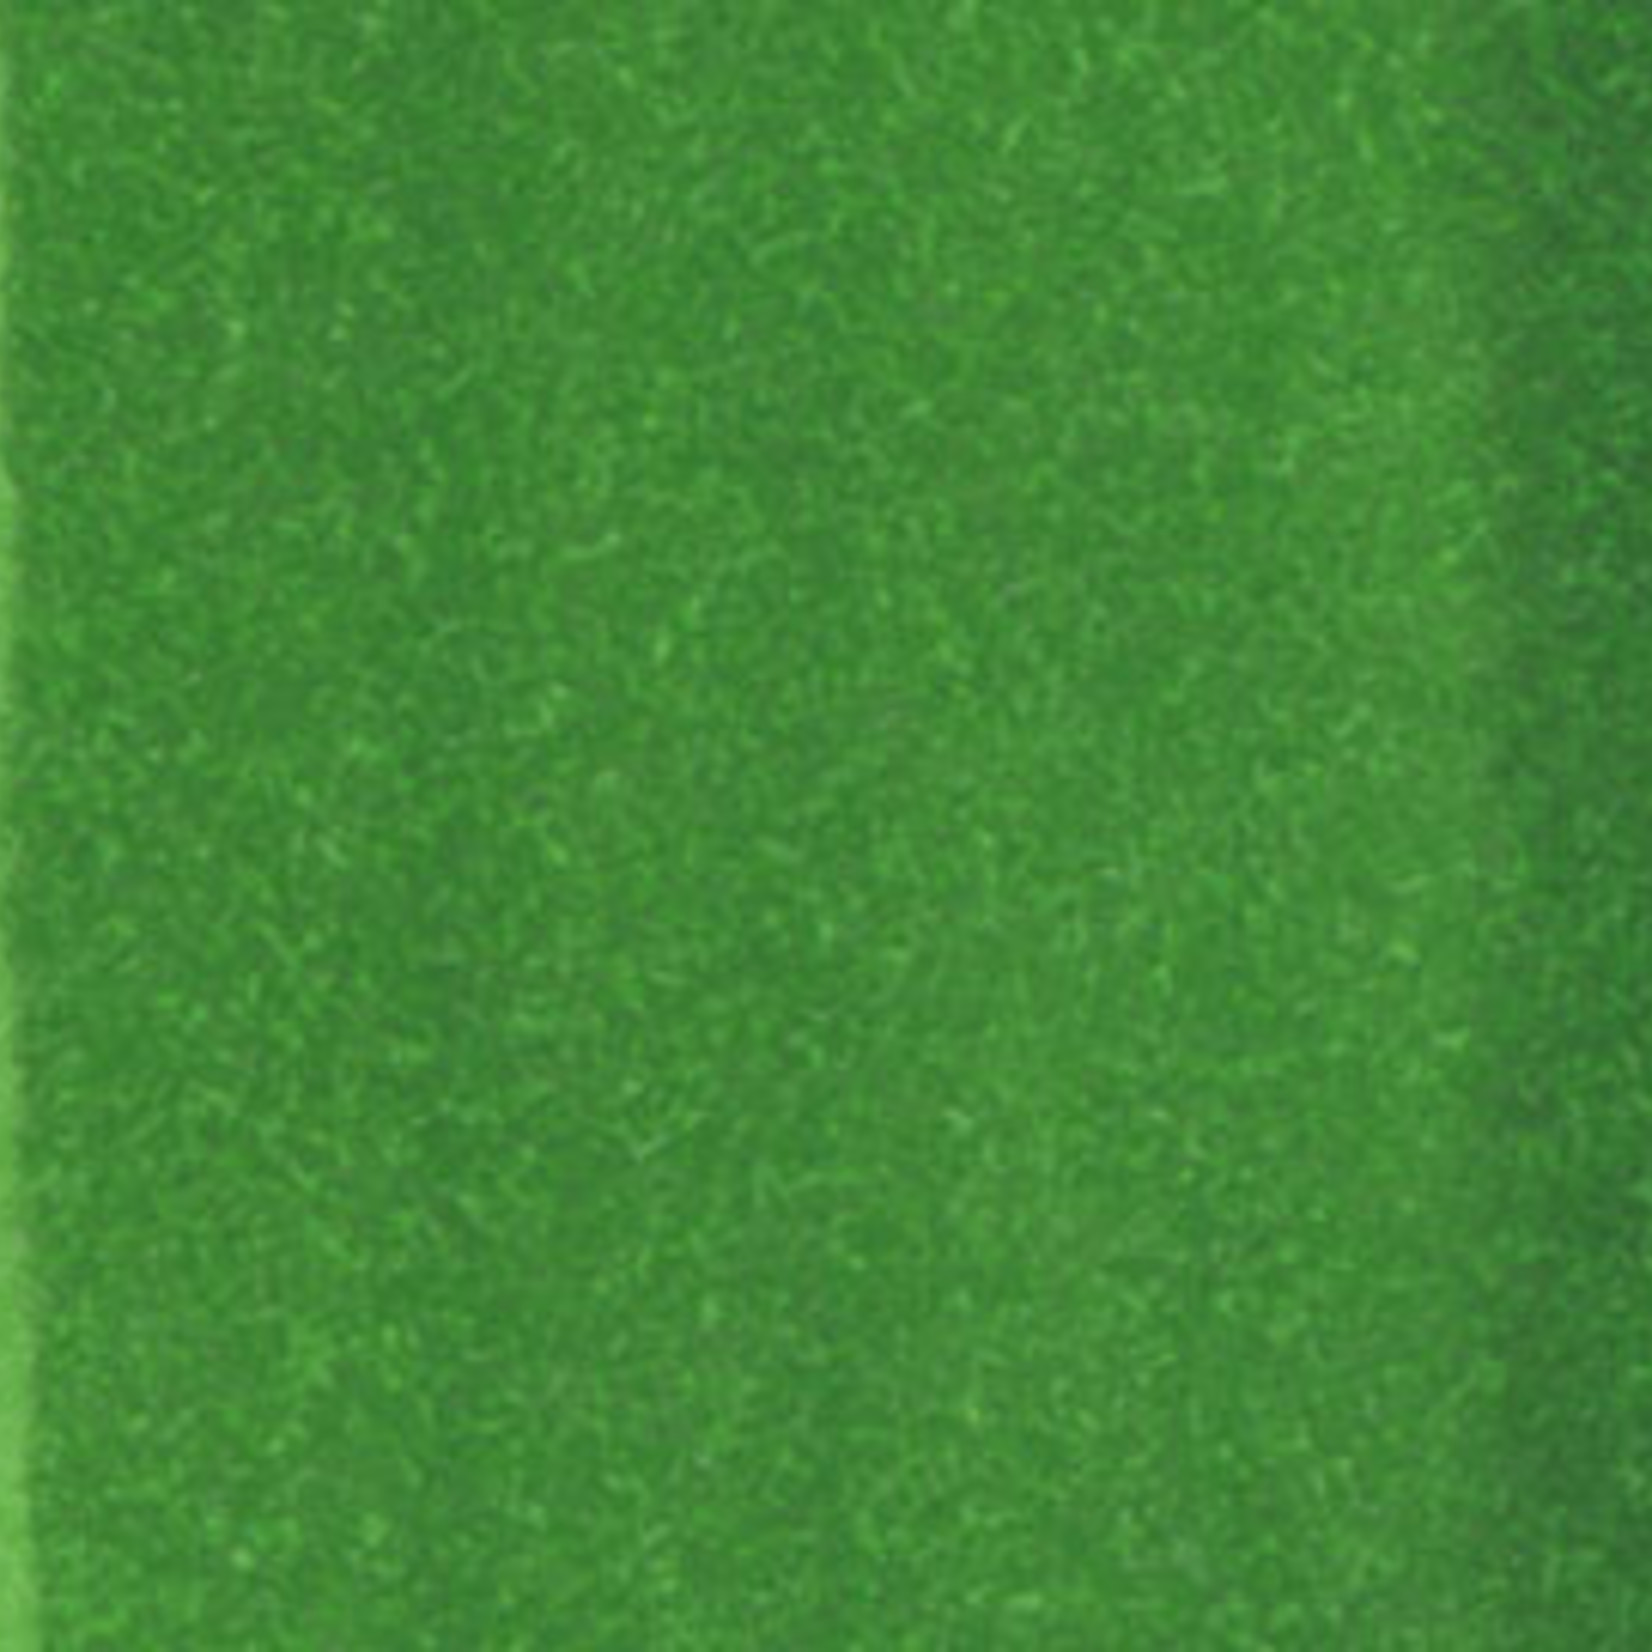 COPIC COPIC SKETCH G07 NILE GREEN